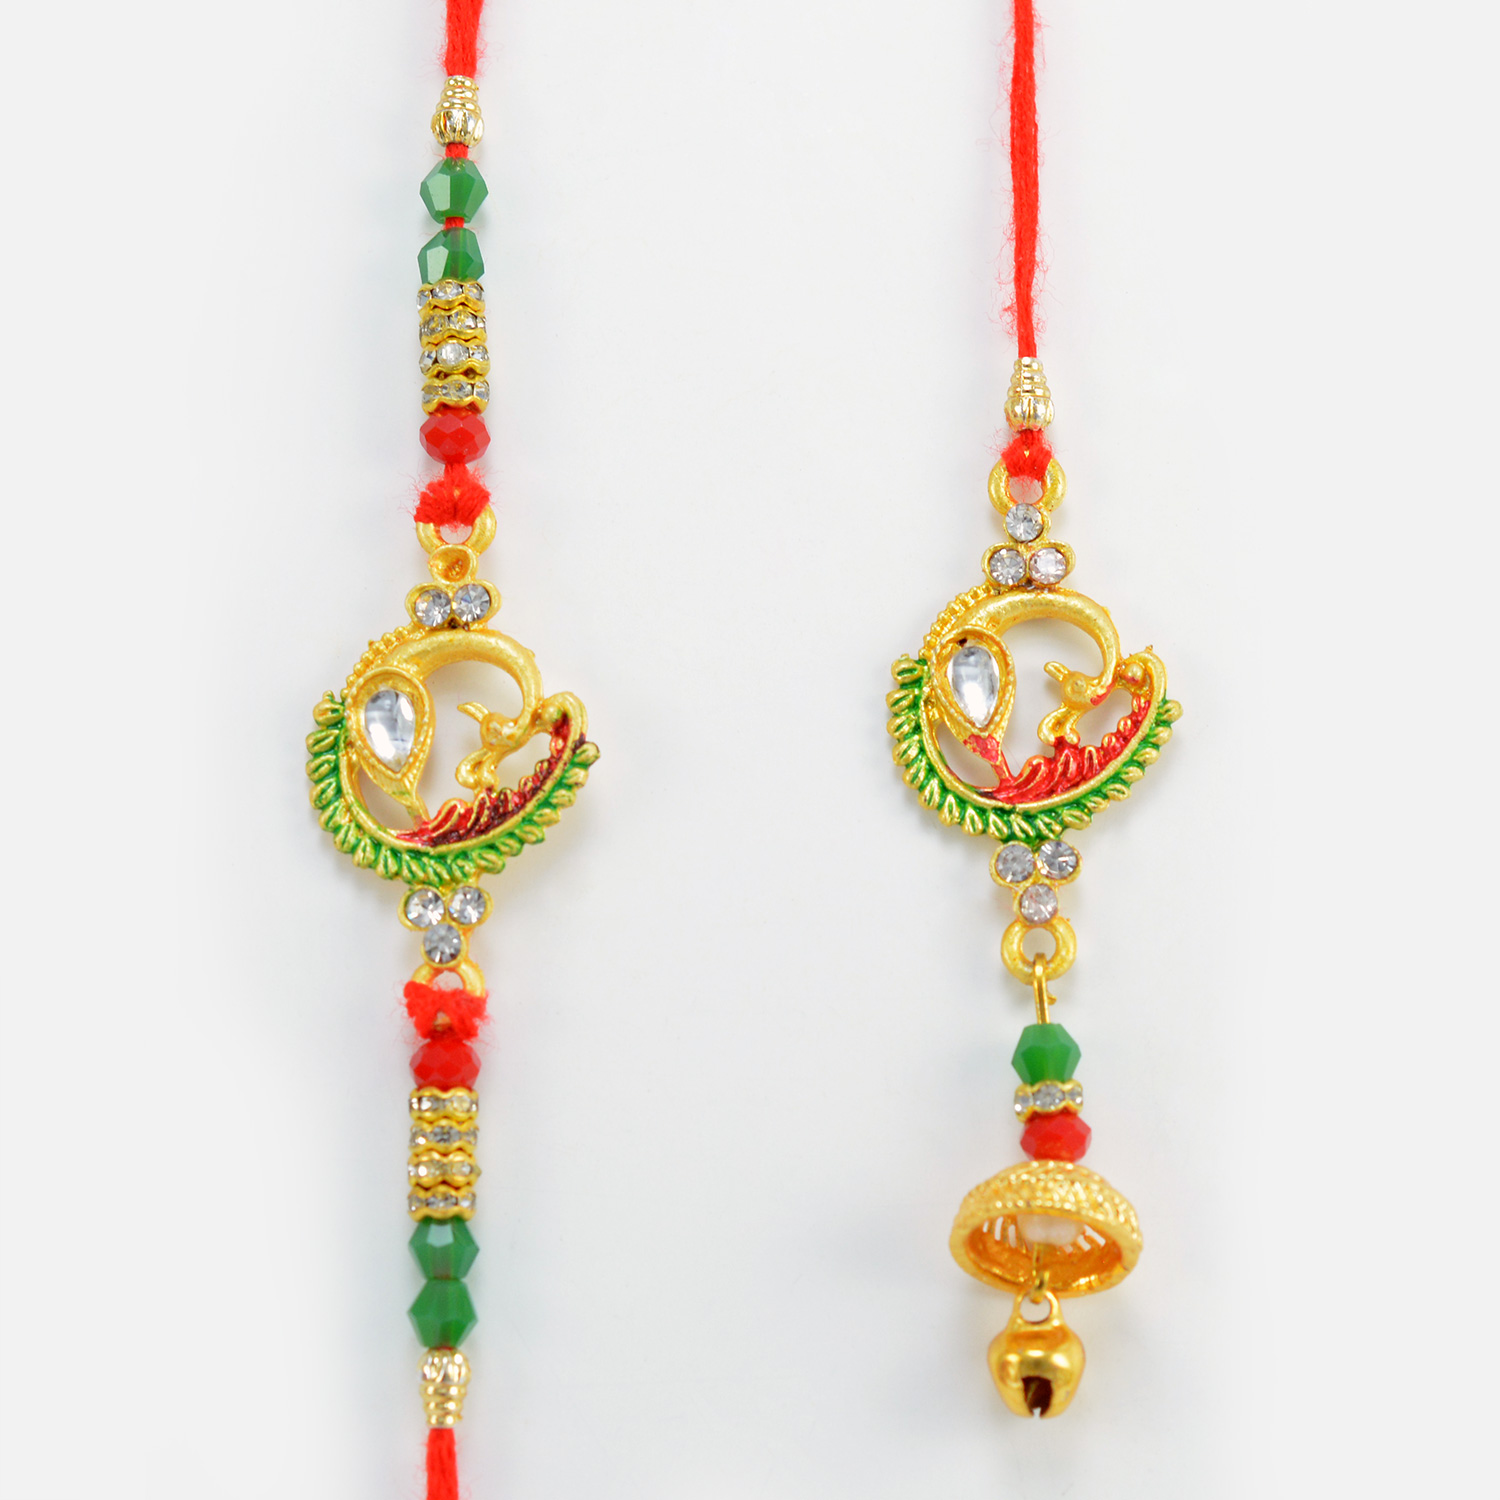 Marvelous Peacock Special Design Colorful Thread Rakhis Pair for Bhaiya and Bhabhi